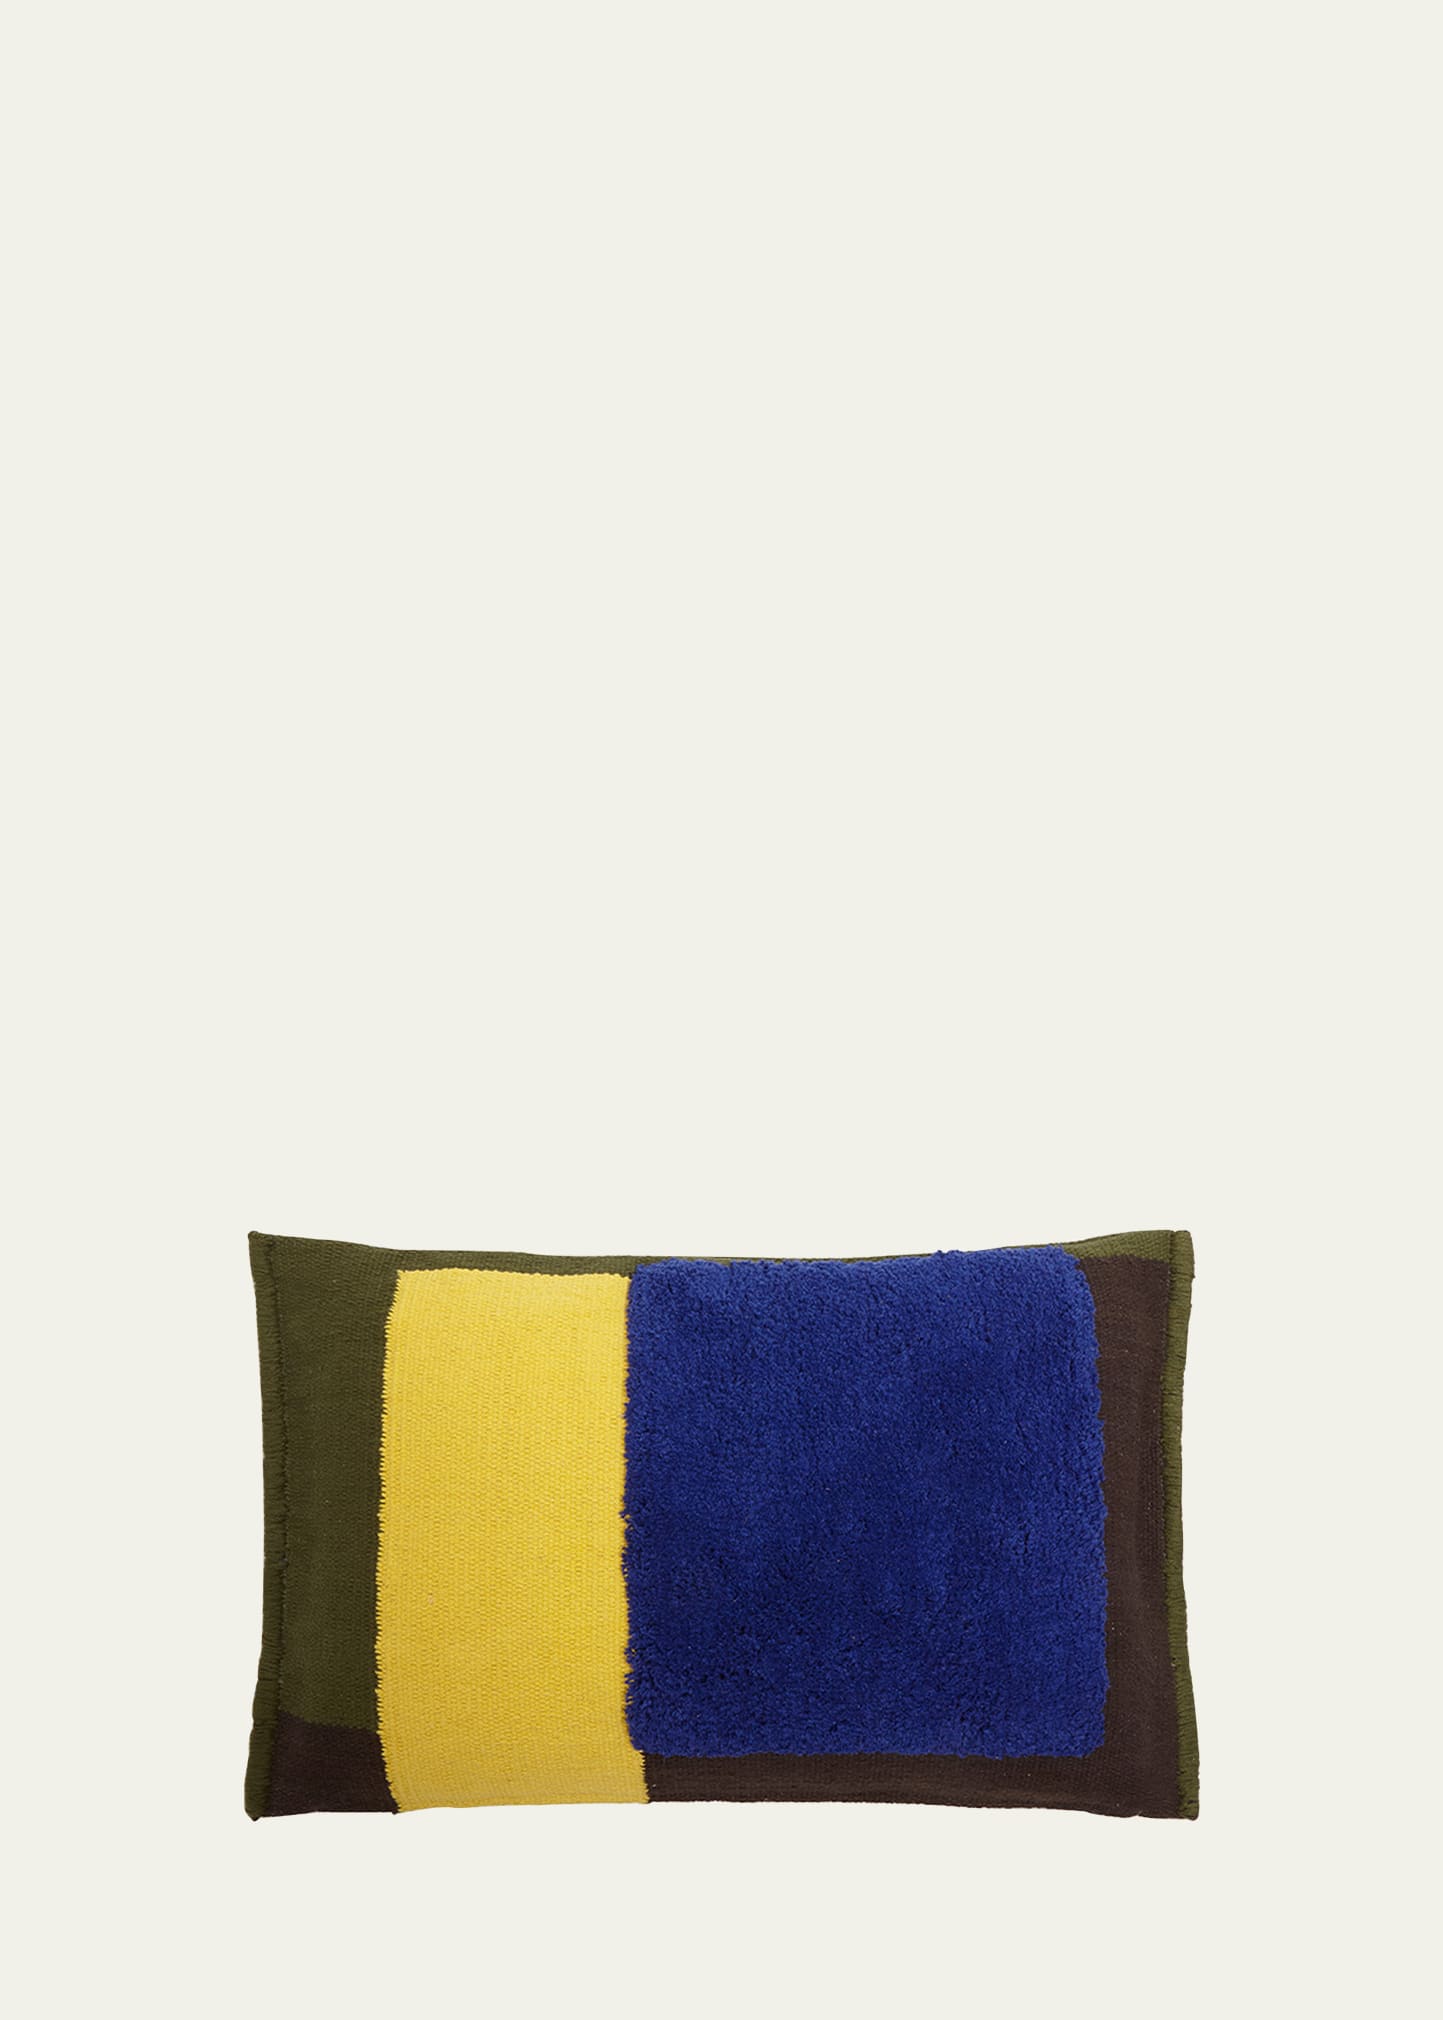 Bauhaus Stripe Cushion, 24 x 16